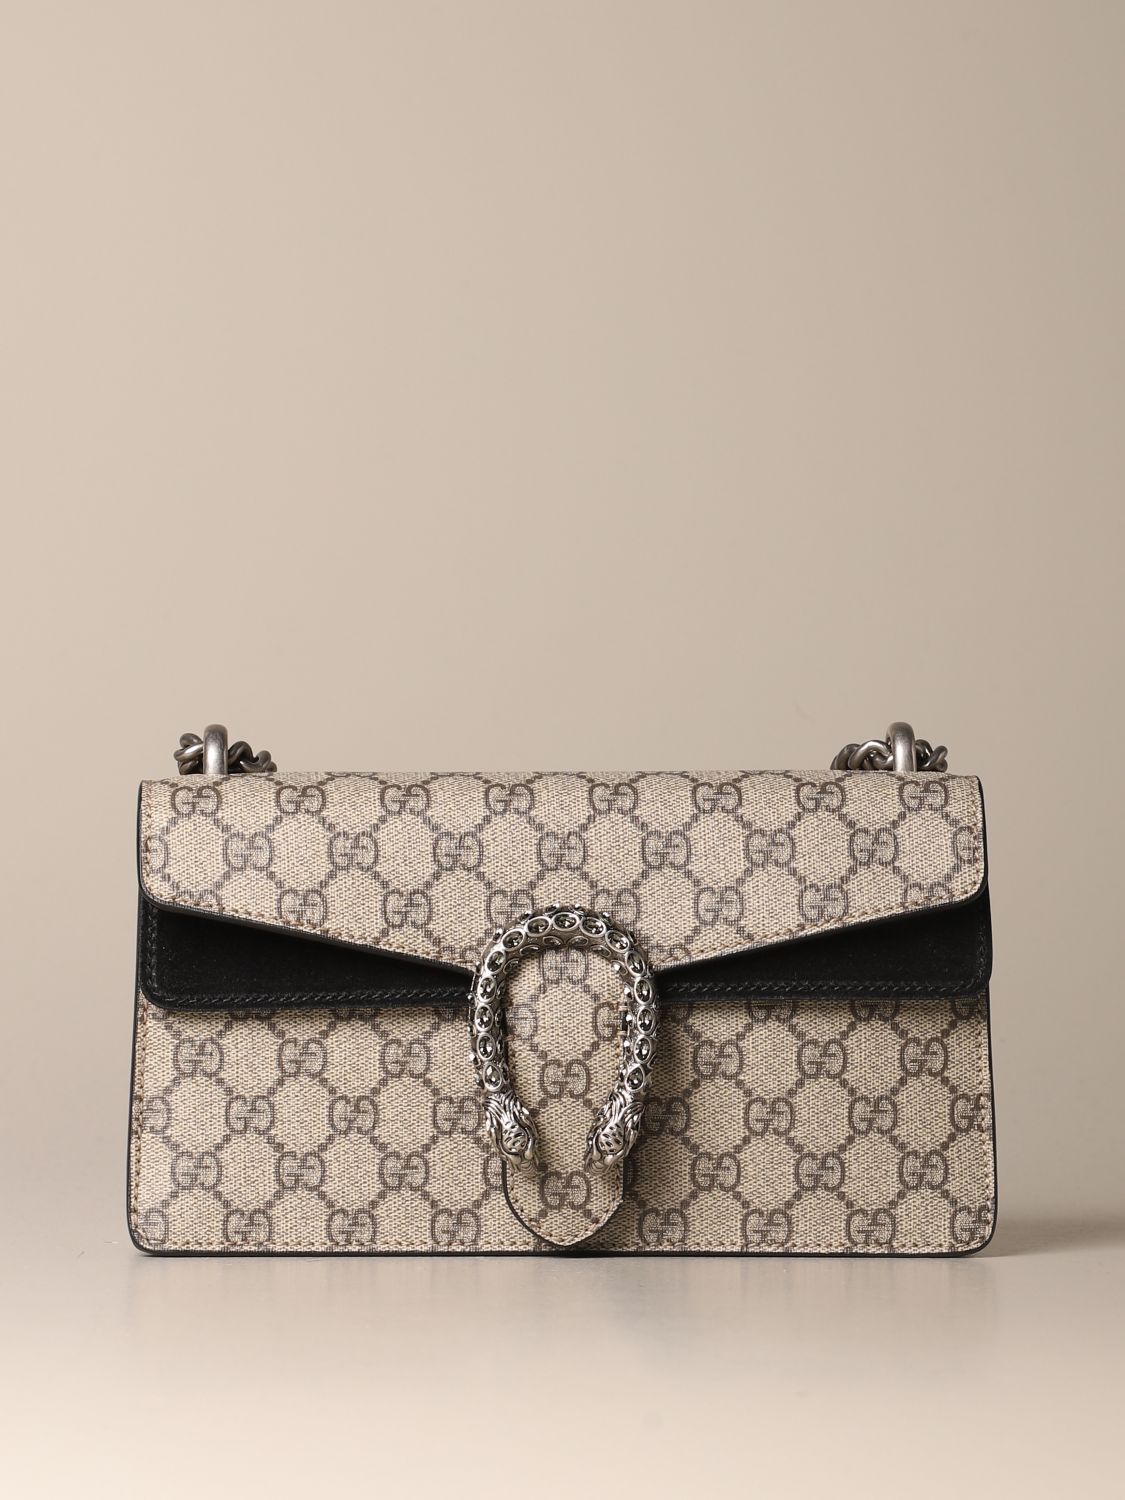 GUCCI: Small Dionysus shoulder bag in GG Supreme fabric - Black | Gucci